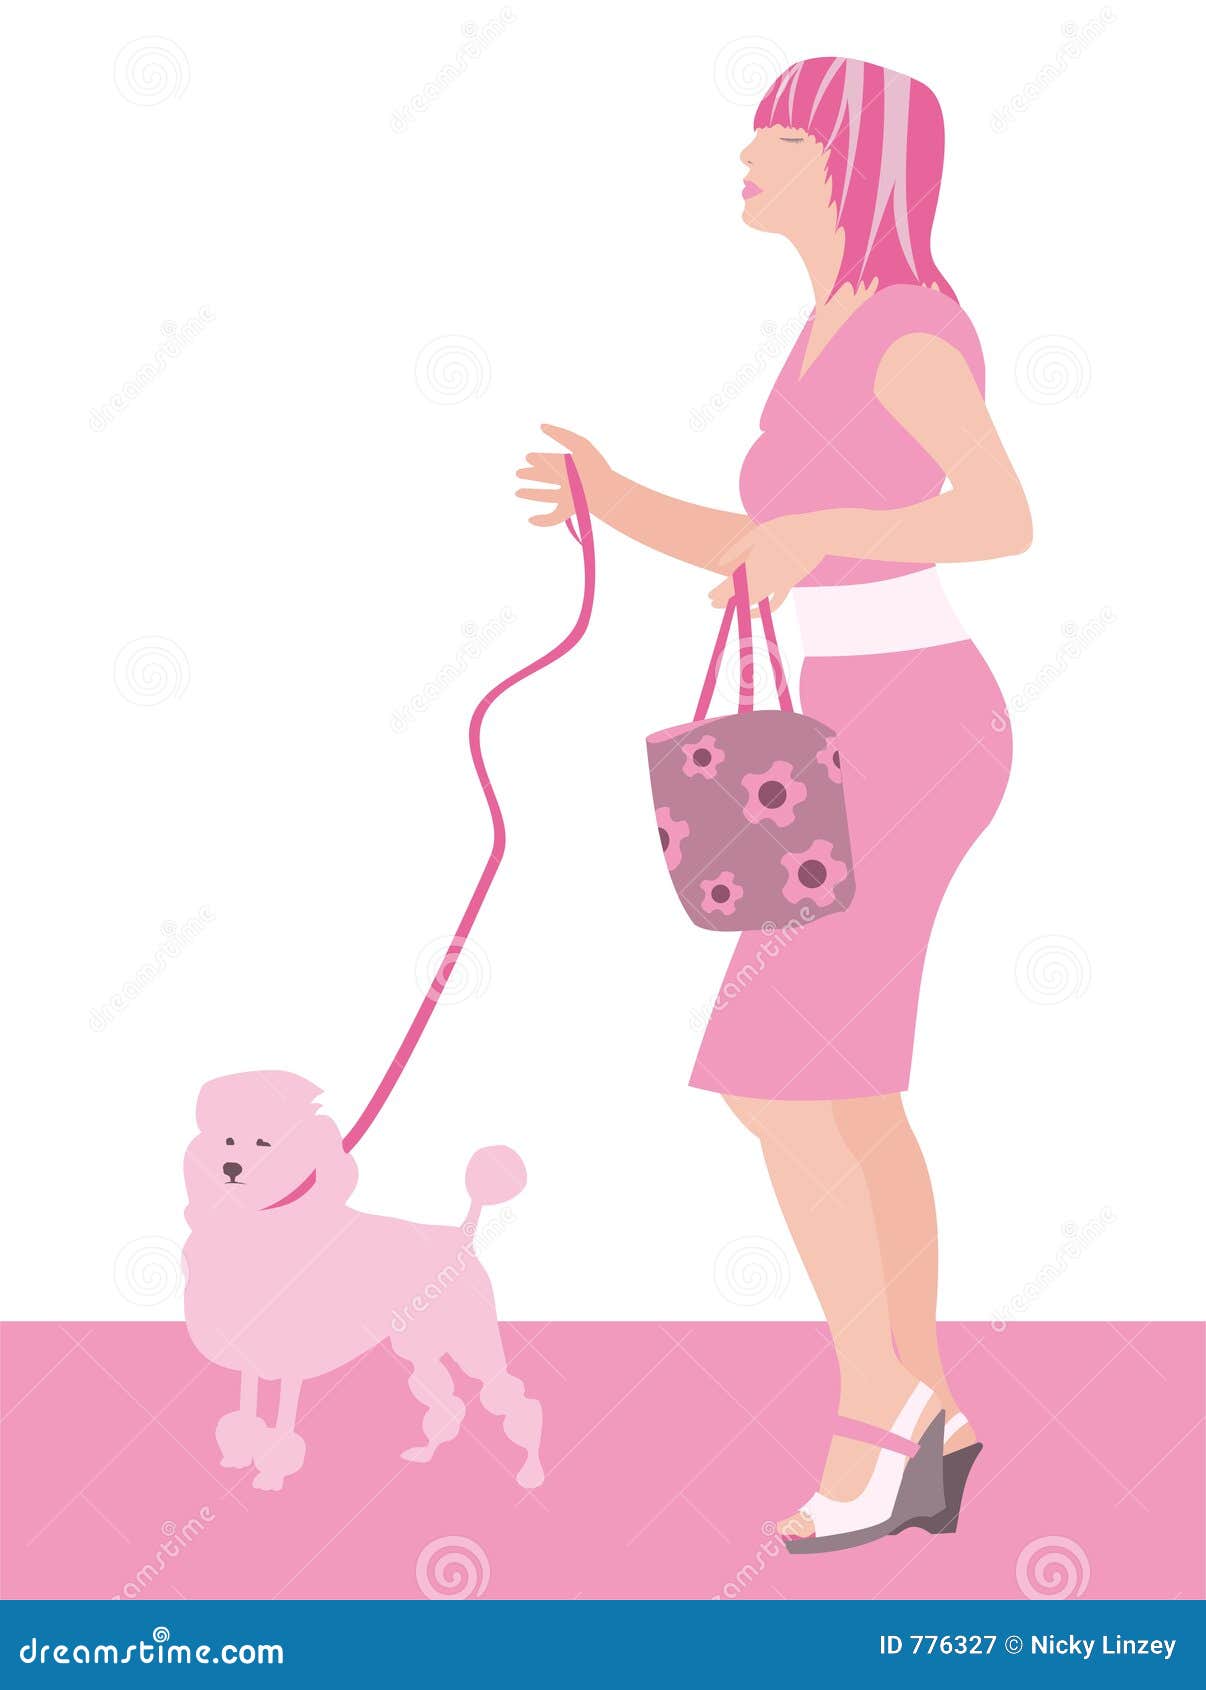 Walking the dog. Illustration of elegant woman walking her colour co-ordinated poodle